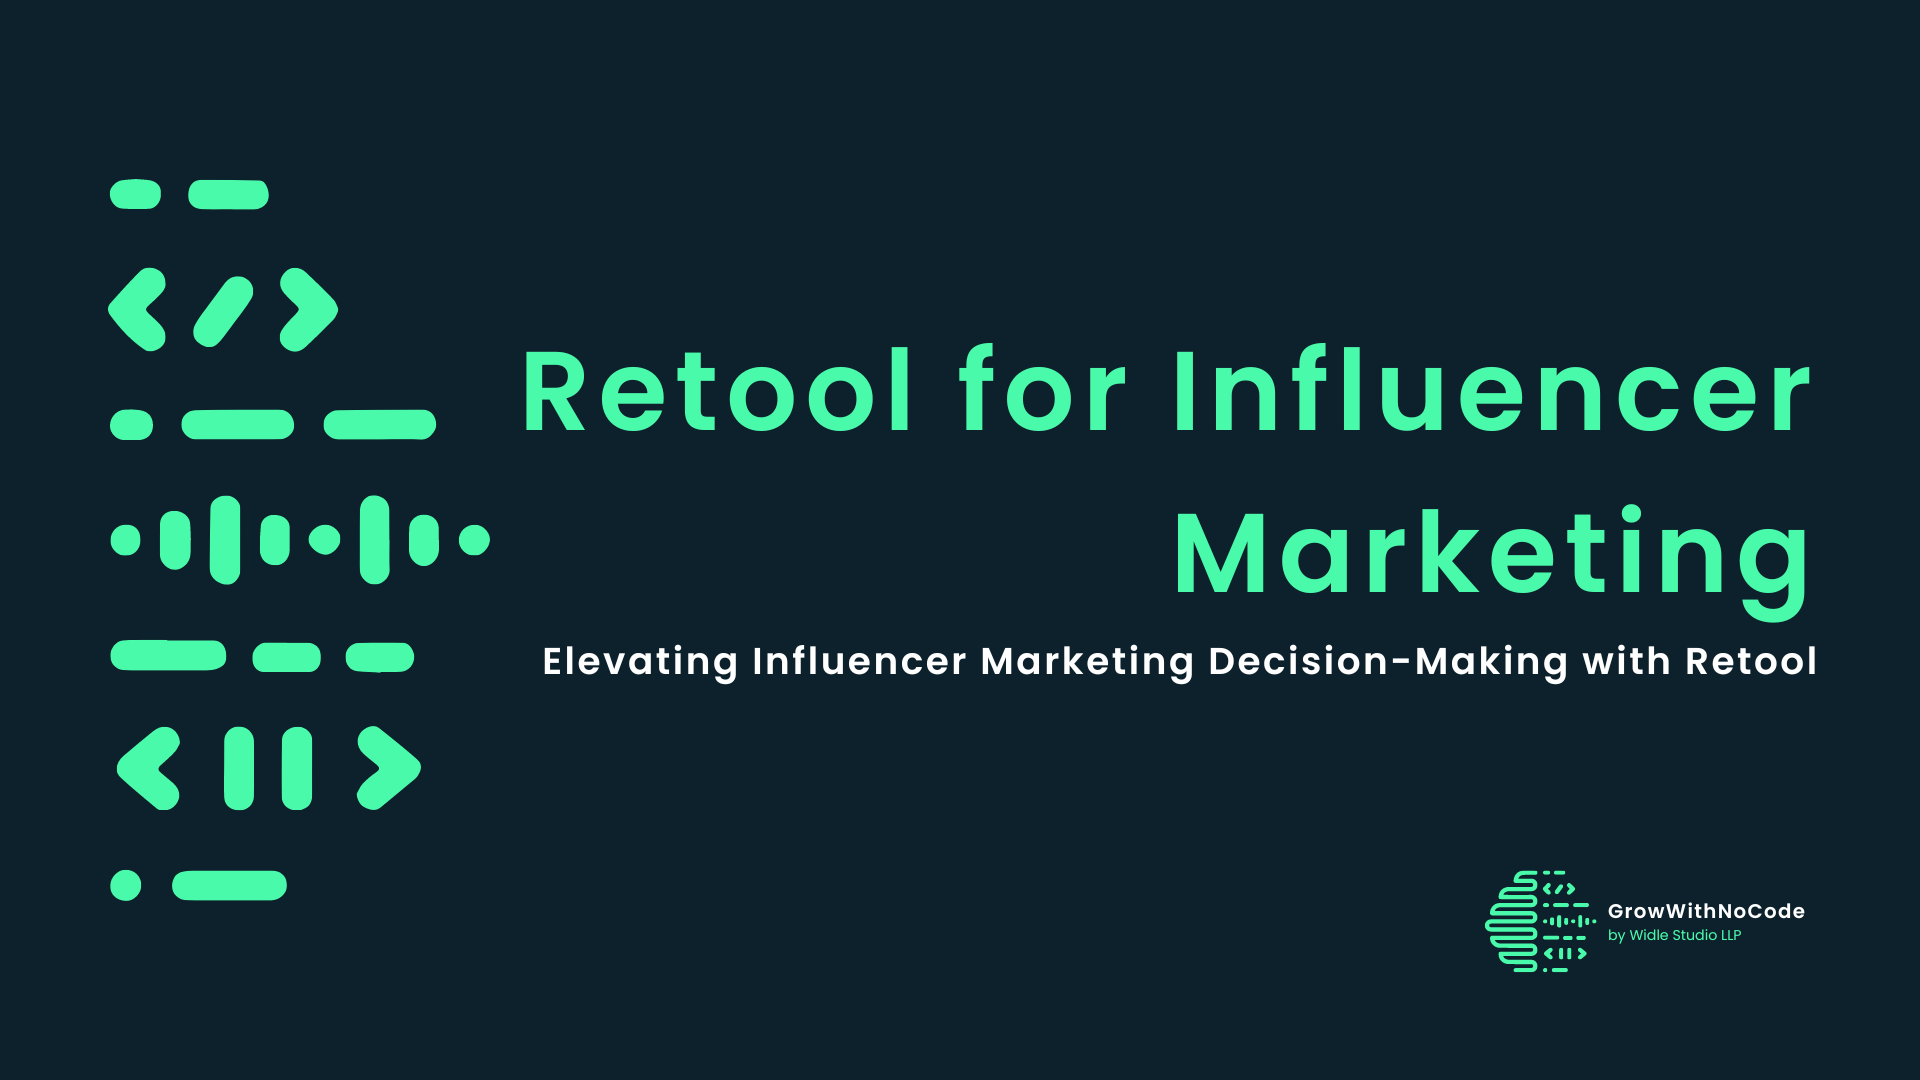 Elevating Influencer Marketing Decision-Making with Retool